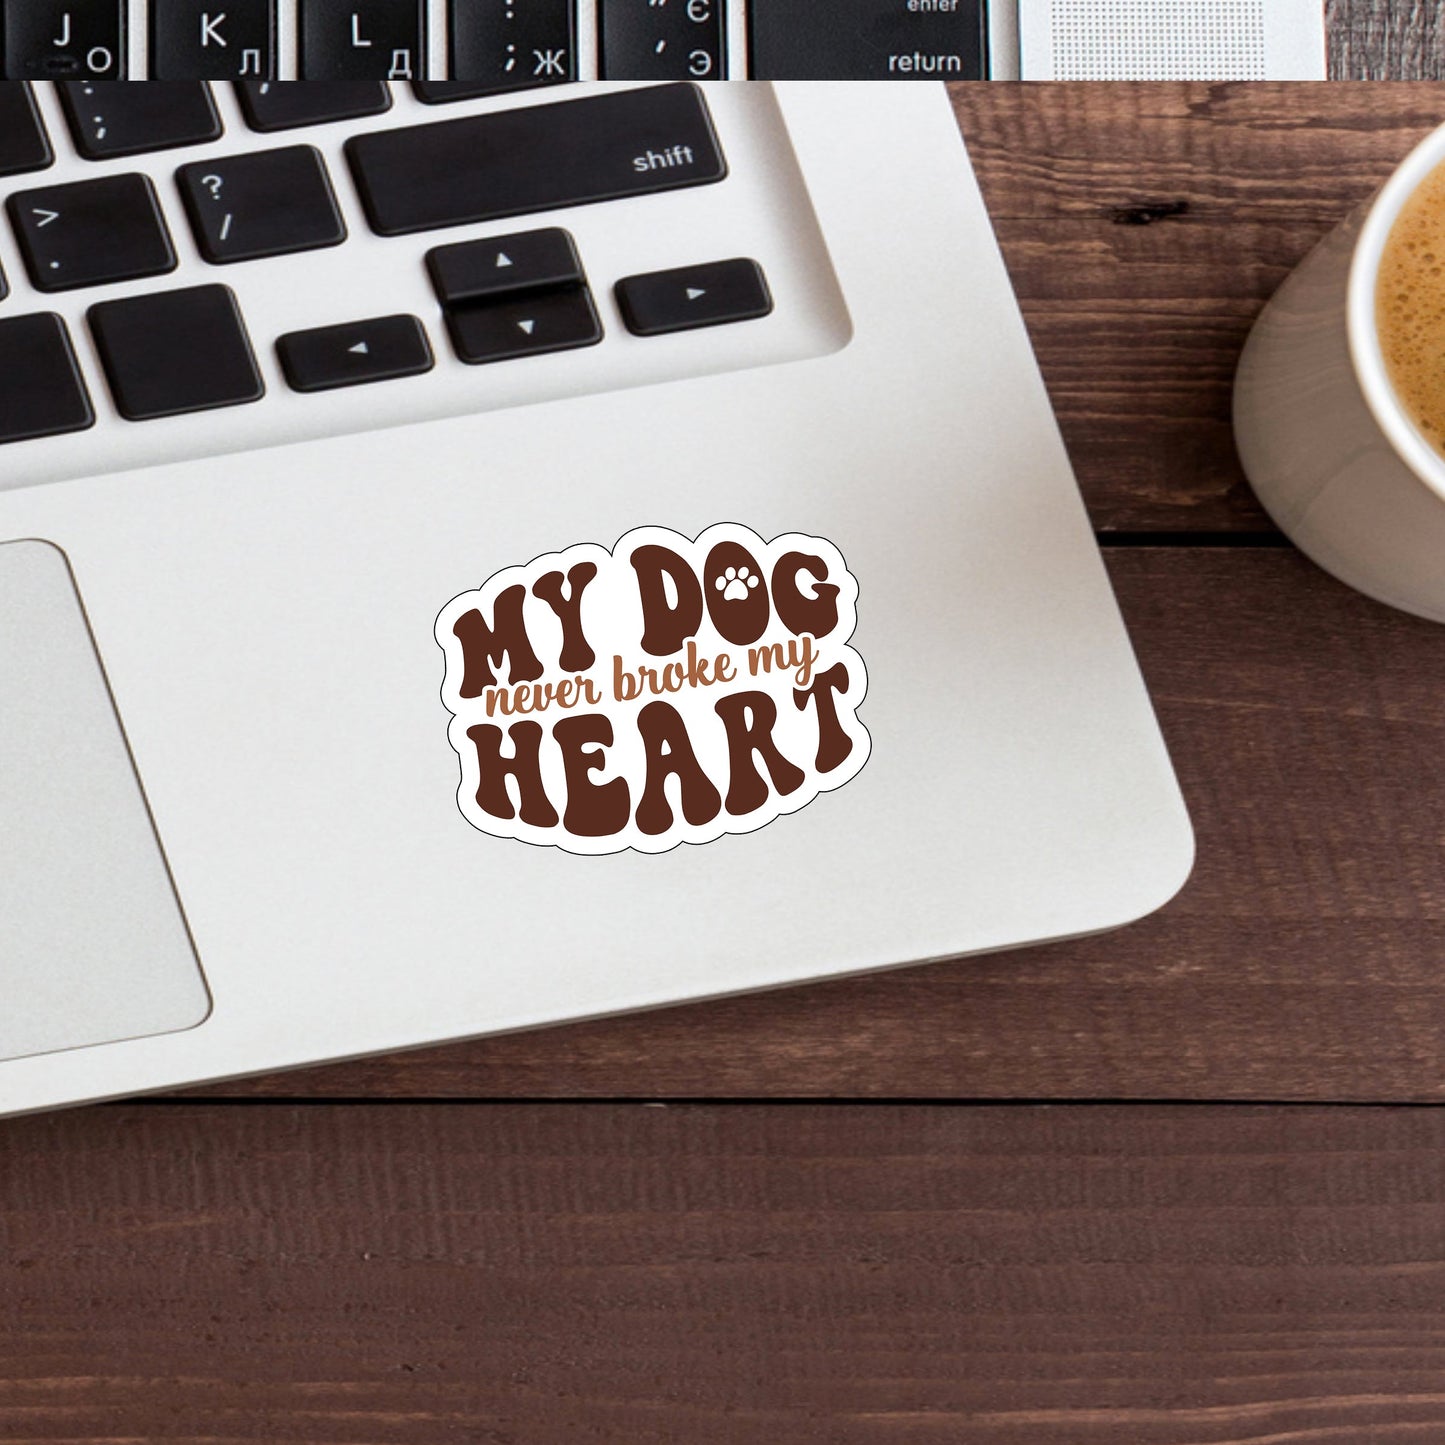 My dog never broke my heart  Sticker,  Vinyl sticker, laptop sticker, Tablet sticker